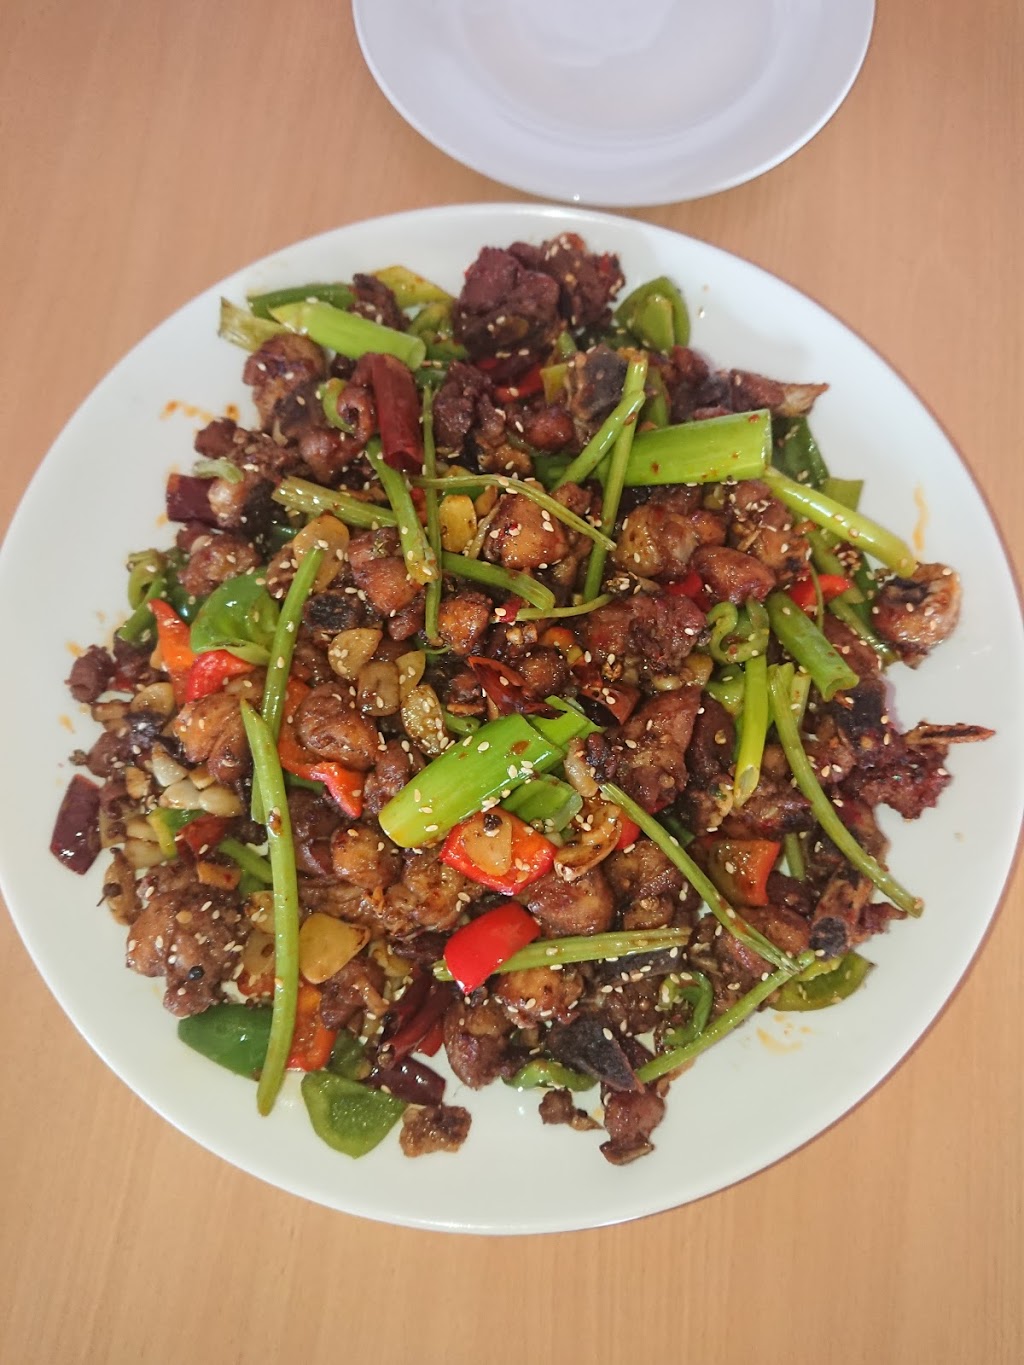 Imperial Spices Uyghur (Halal) Cuisine | restaurant | 6/1048 Grand Jct Rd, Holden Hill SA 5088, Australia | 0469013603 OR +61 469 013 603